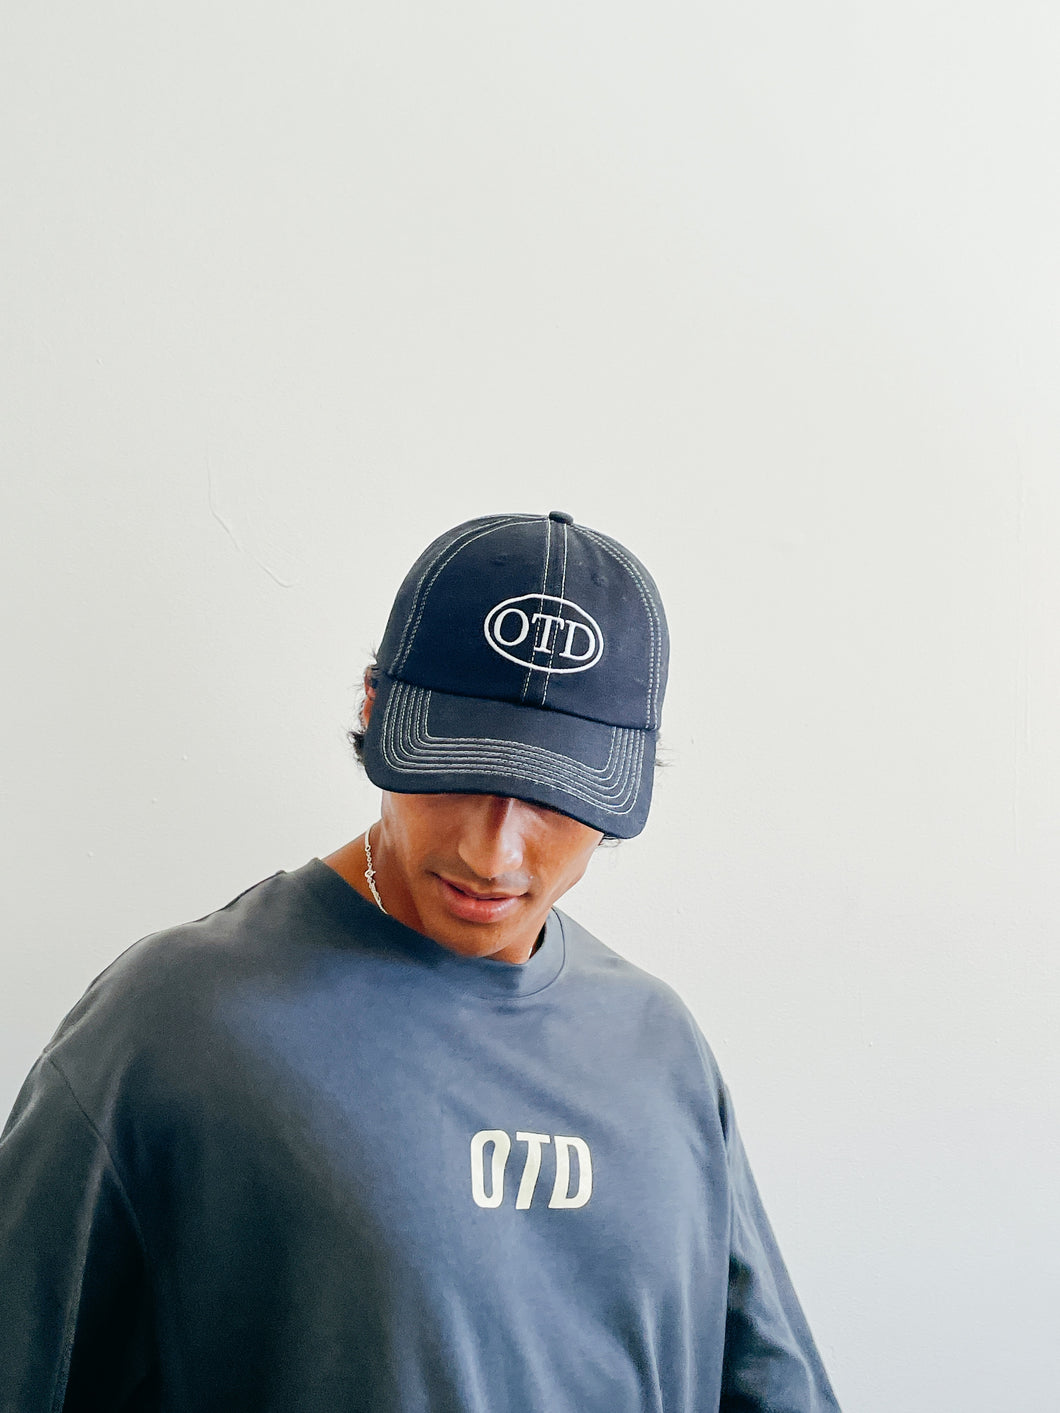 OTD Black cap